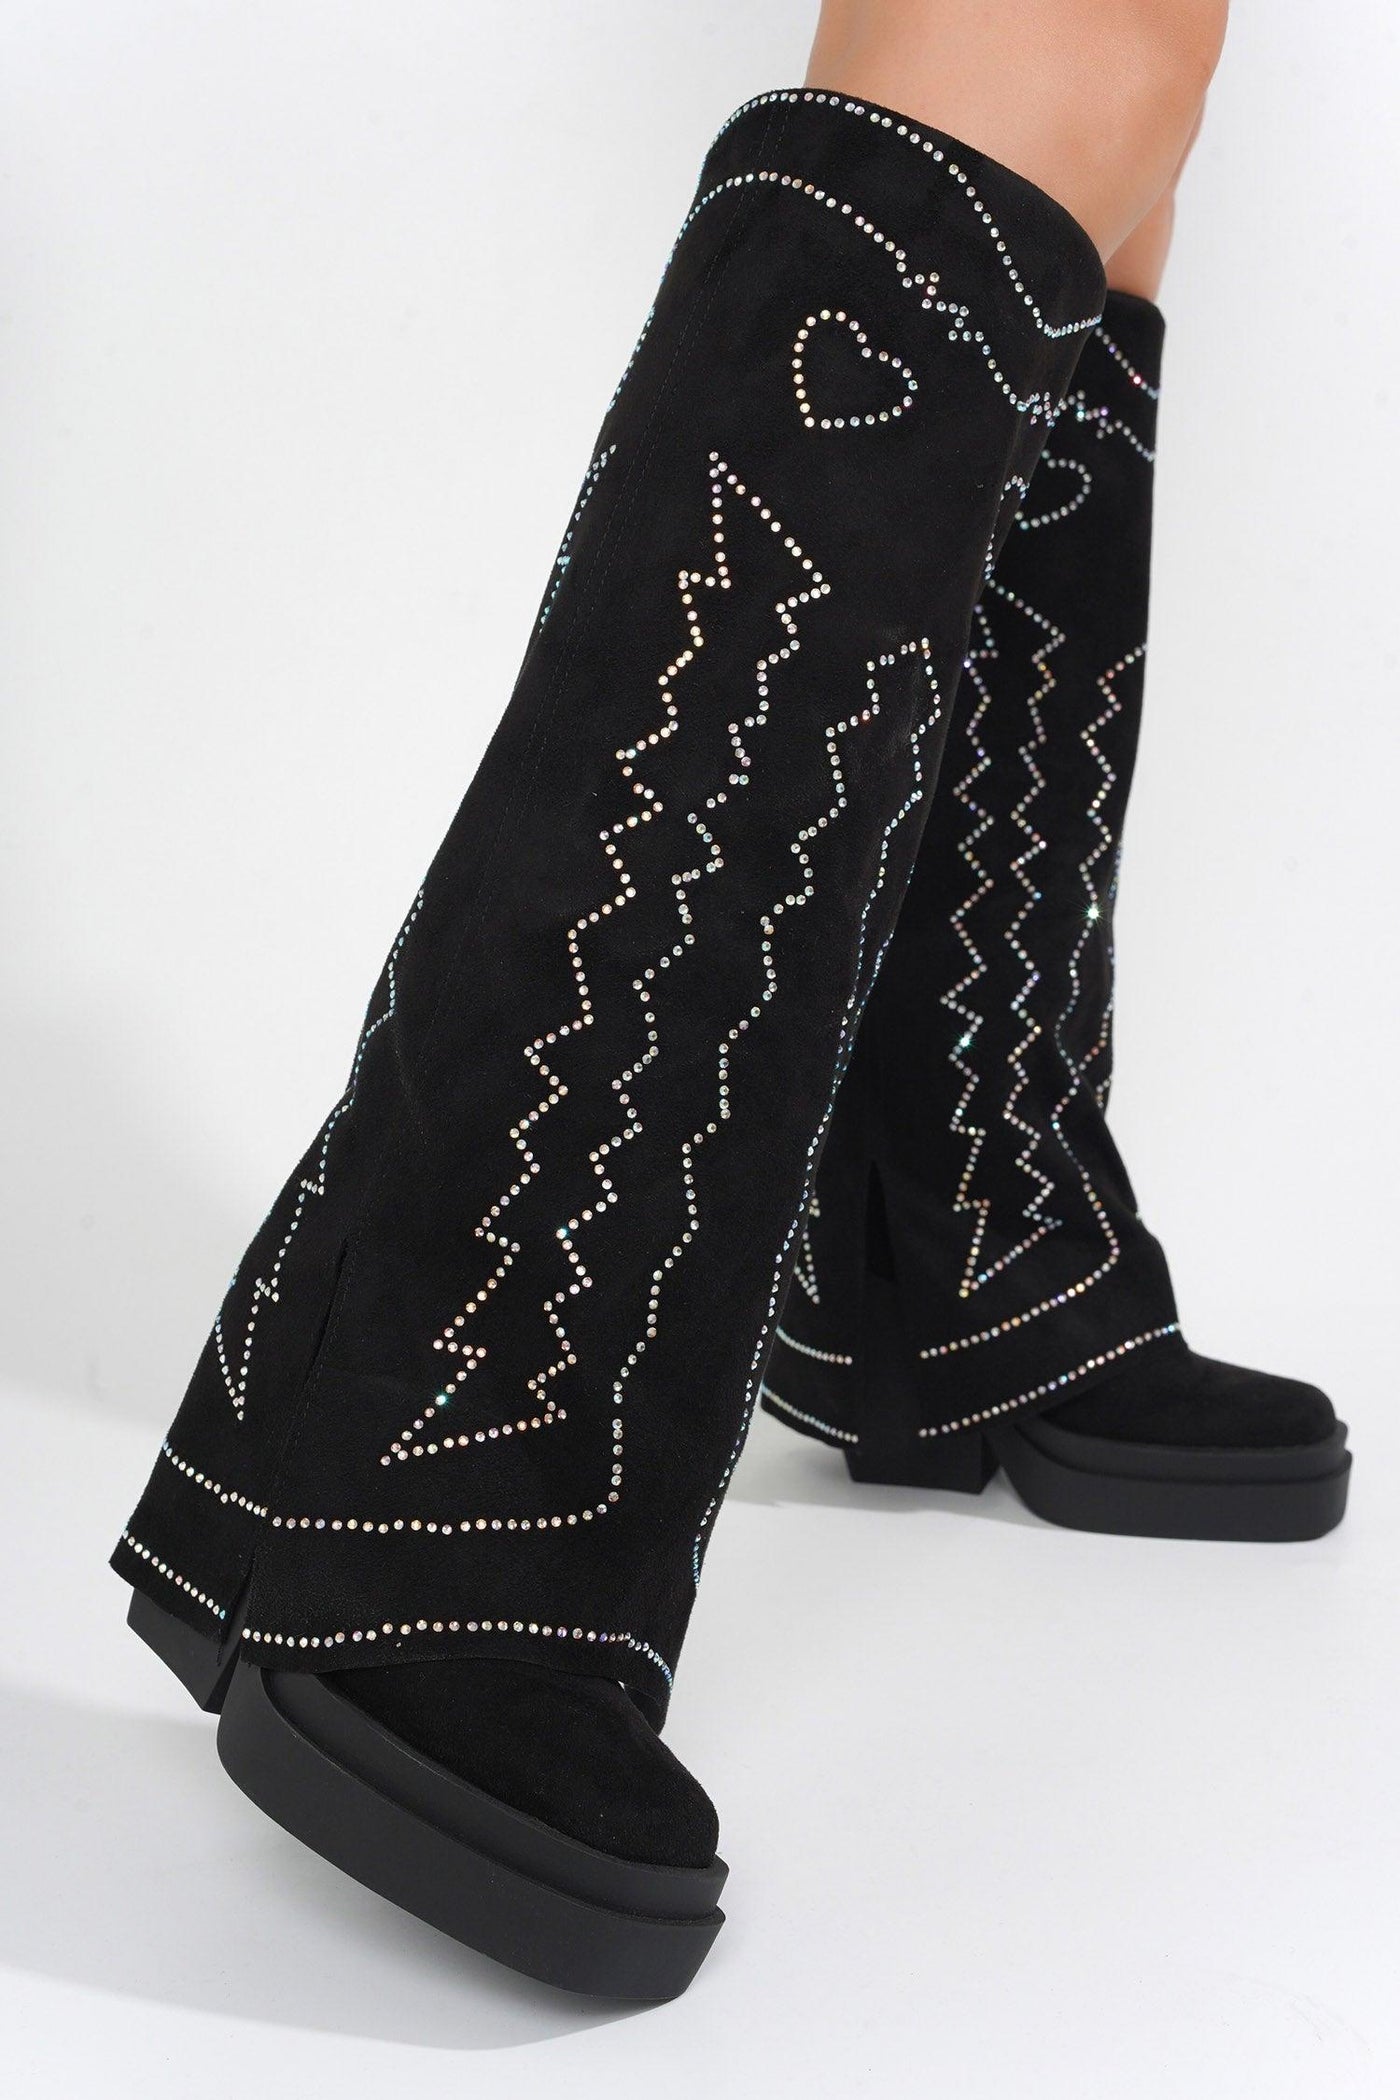 LUVO - BLACK Thigh High Boots